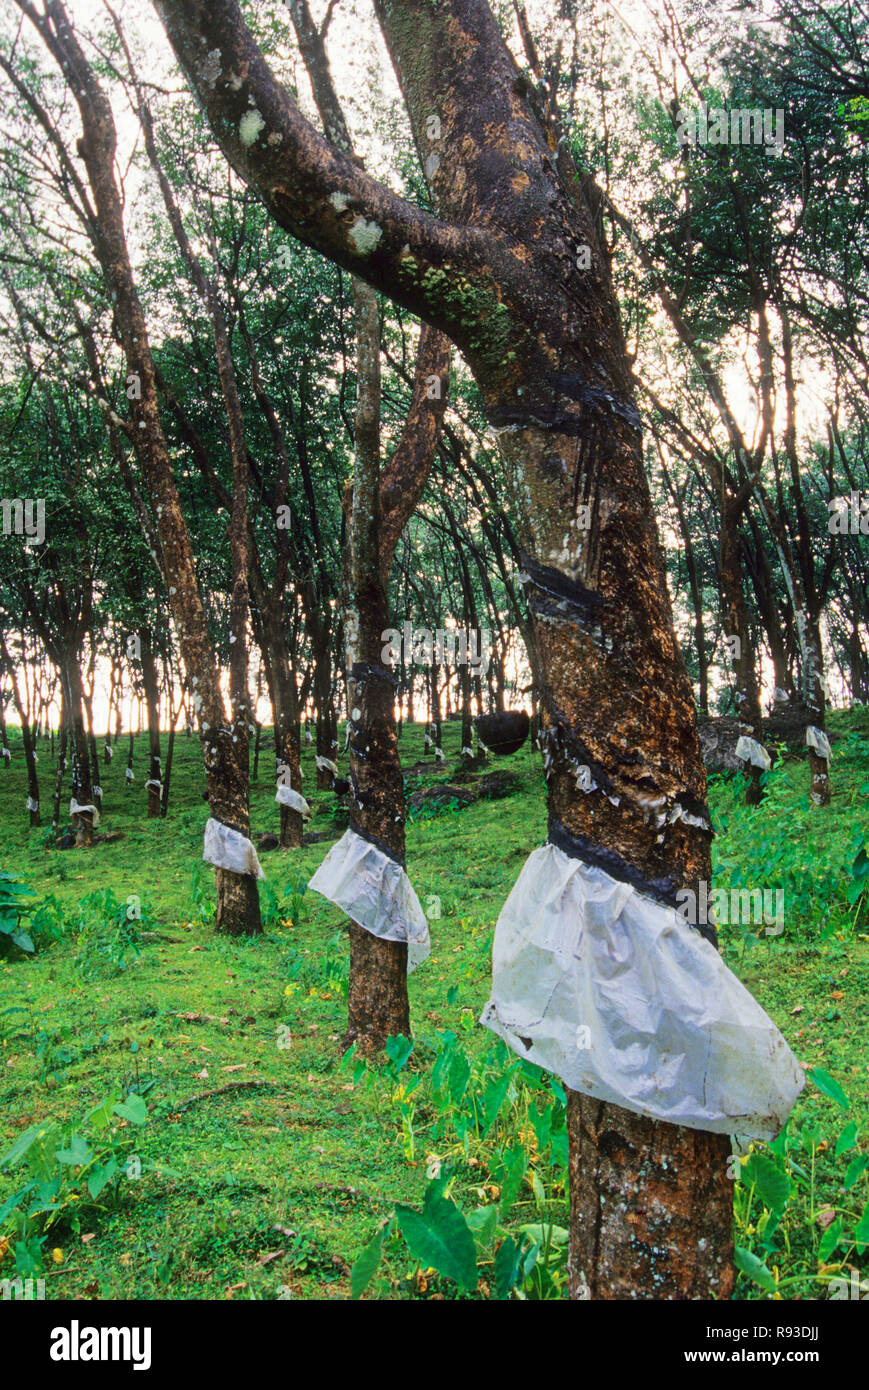 Rubber plantation in India Stock Photo